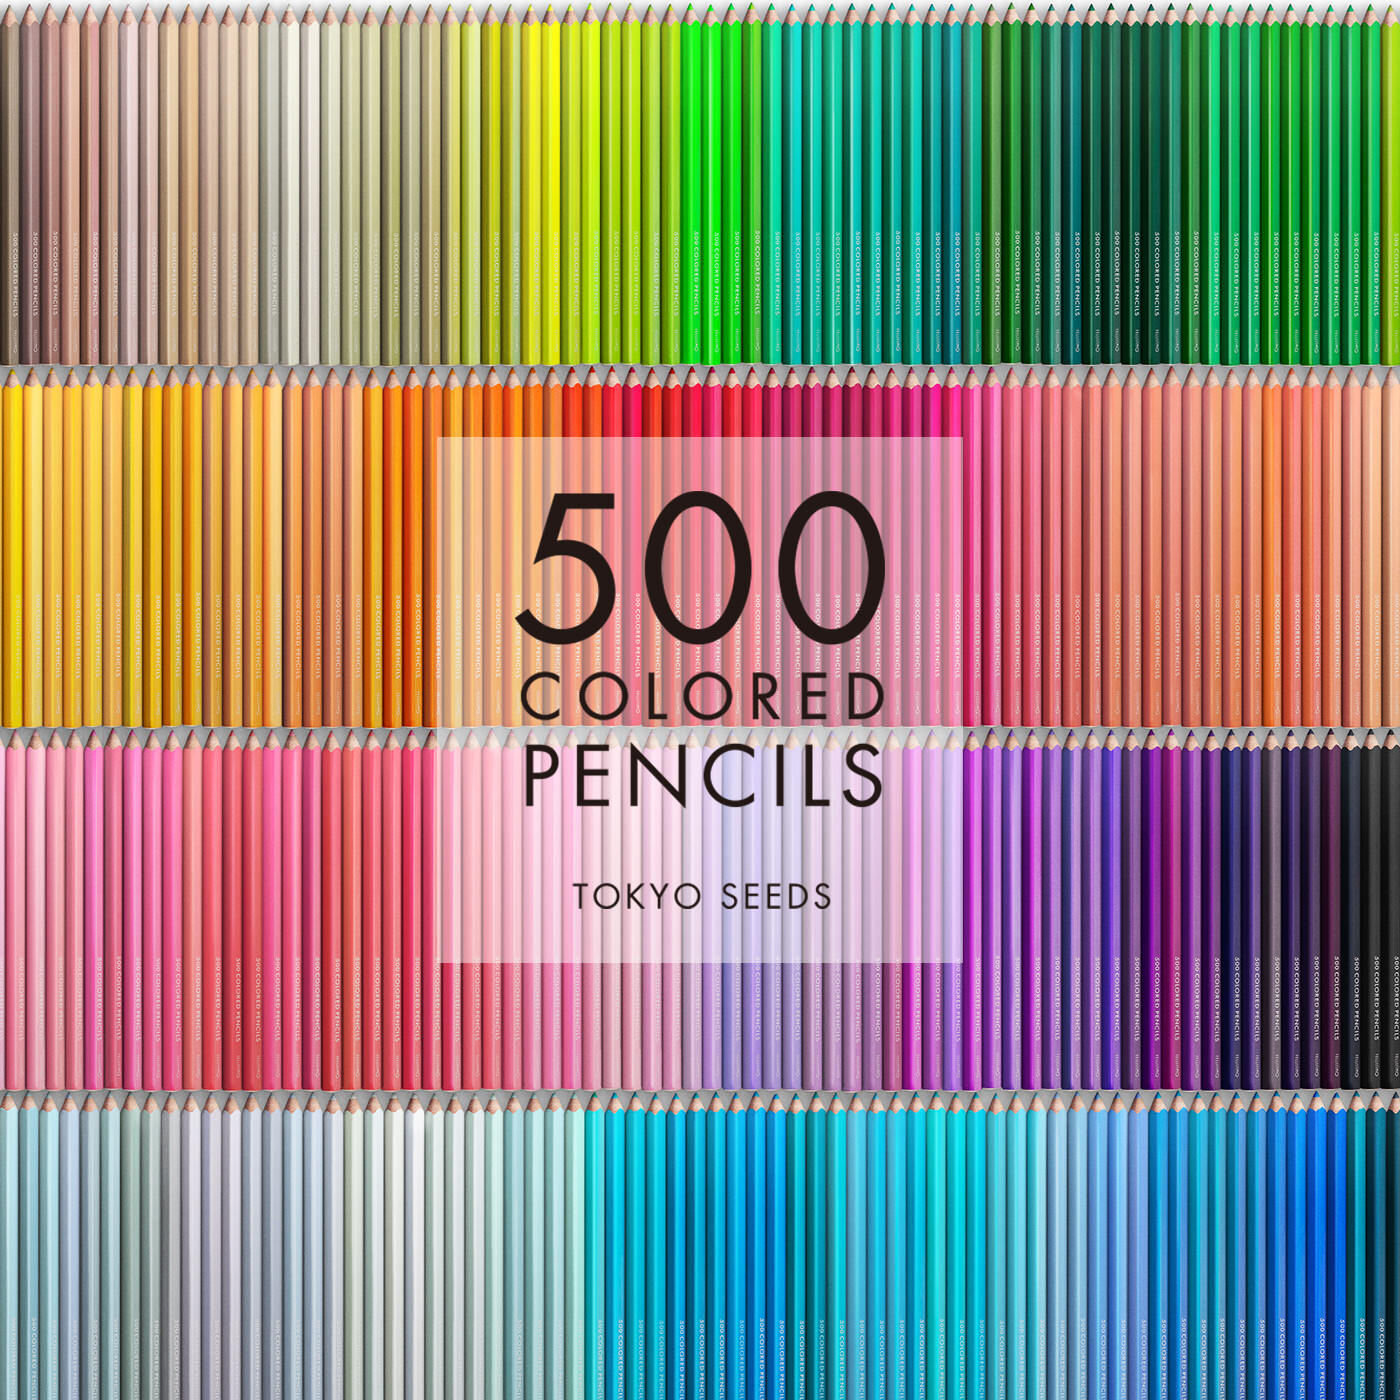 Real Stock|【141/500 RELISHED TIME】500色の色えんぴつ TOKYO SEEDS|1992年、世界初の「500色」という膨大な色数の色えんぴつが誕生して以来、その販売数は発売当初から合わせると、世界55ヵ国10万セット以上。今回、メイド・イン・ジャパンにこだわり、すべてが新しく生まれ変わって登場しました。